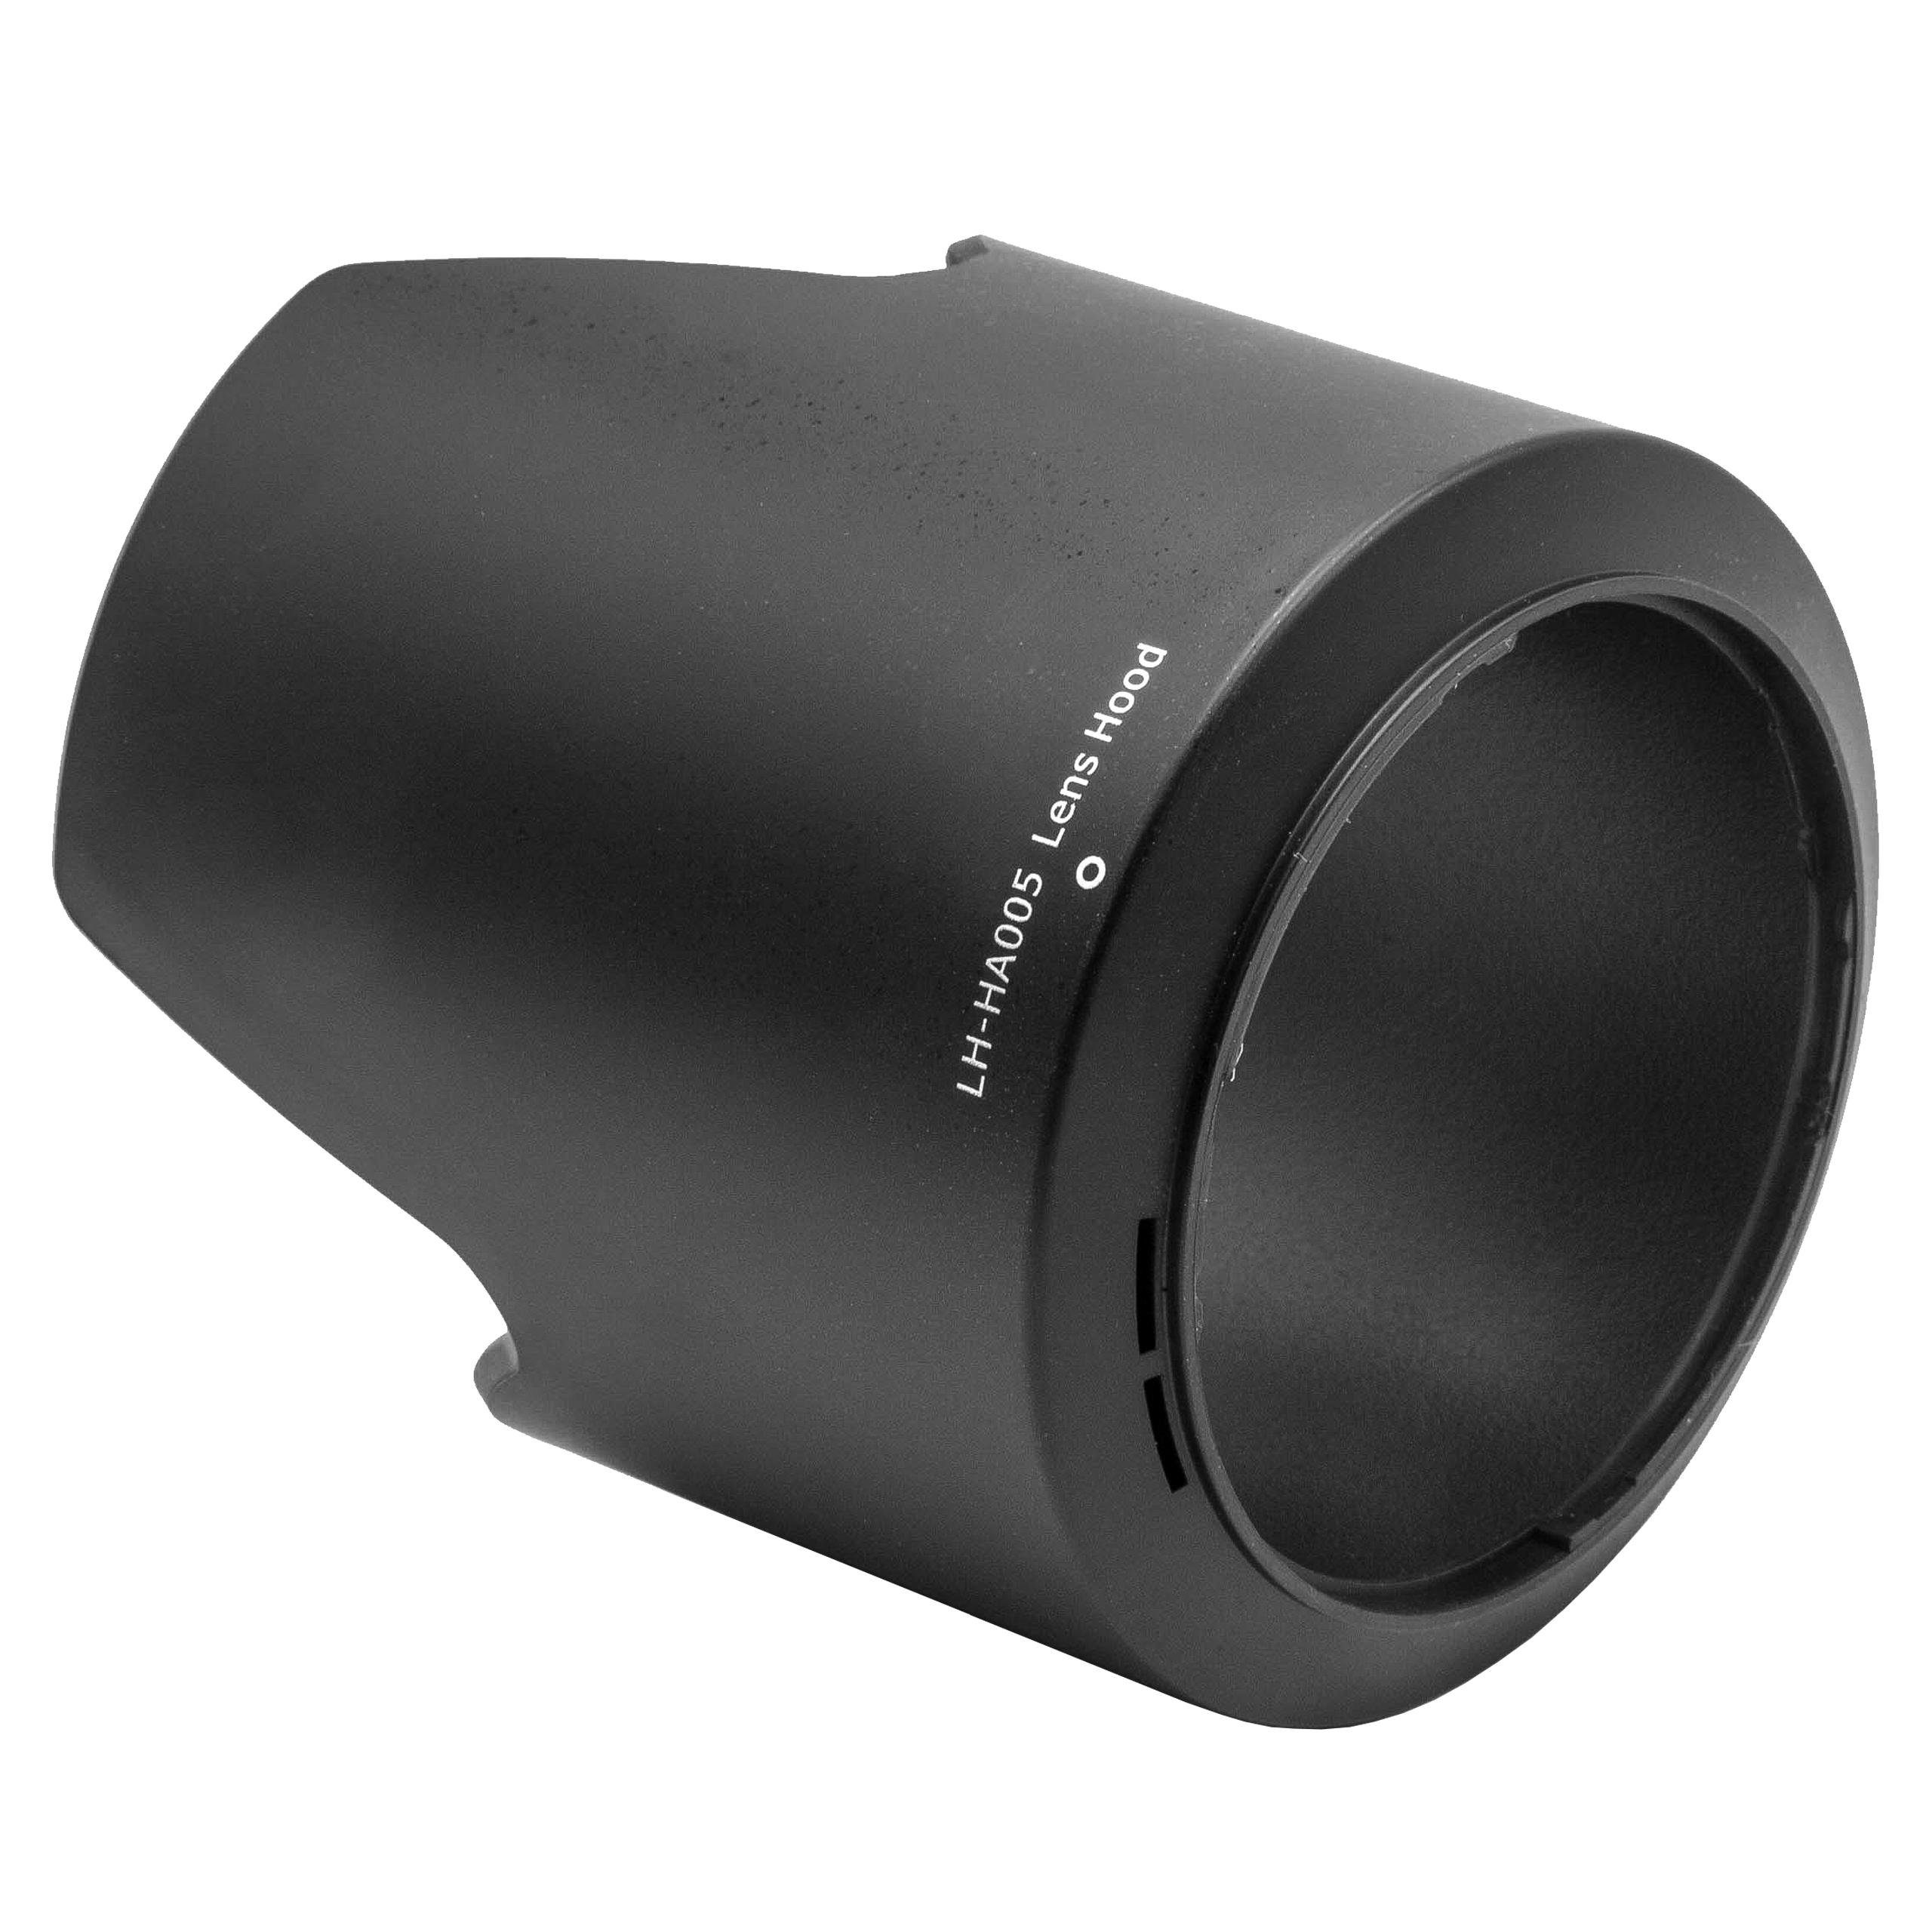 vhbw passend für Tamron SP Foto 70-300mm Gegenlichtblende VC Di (Modell USD f/4-5.6 A005)